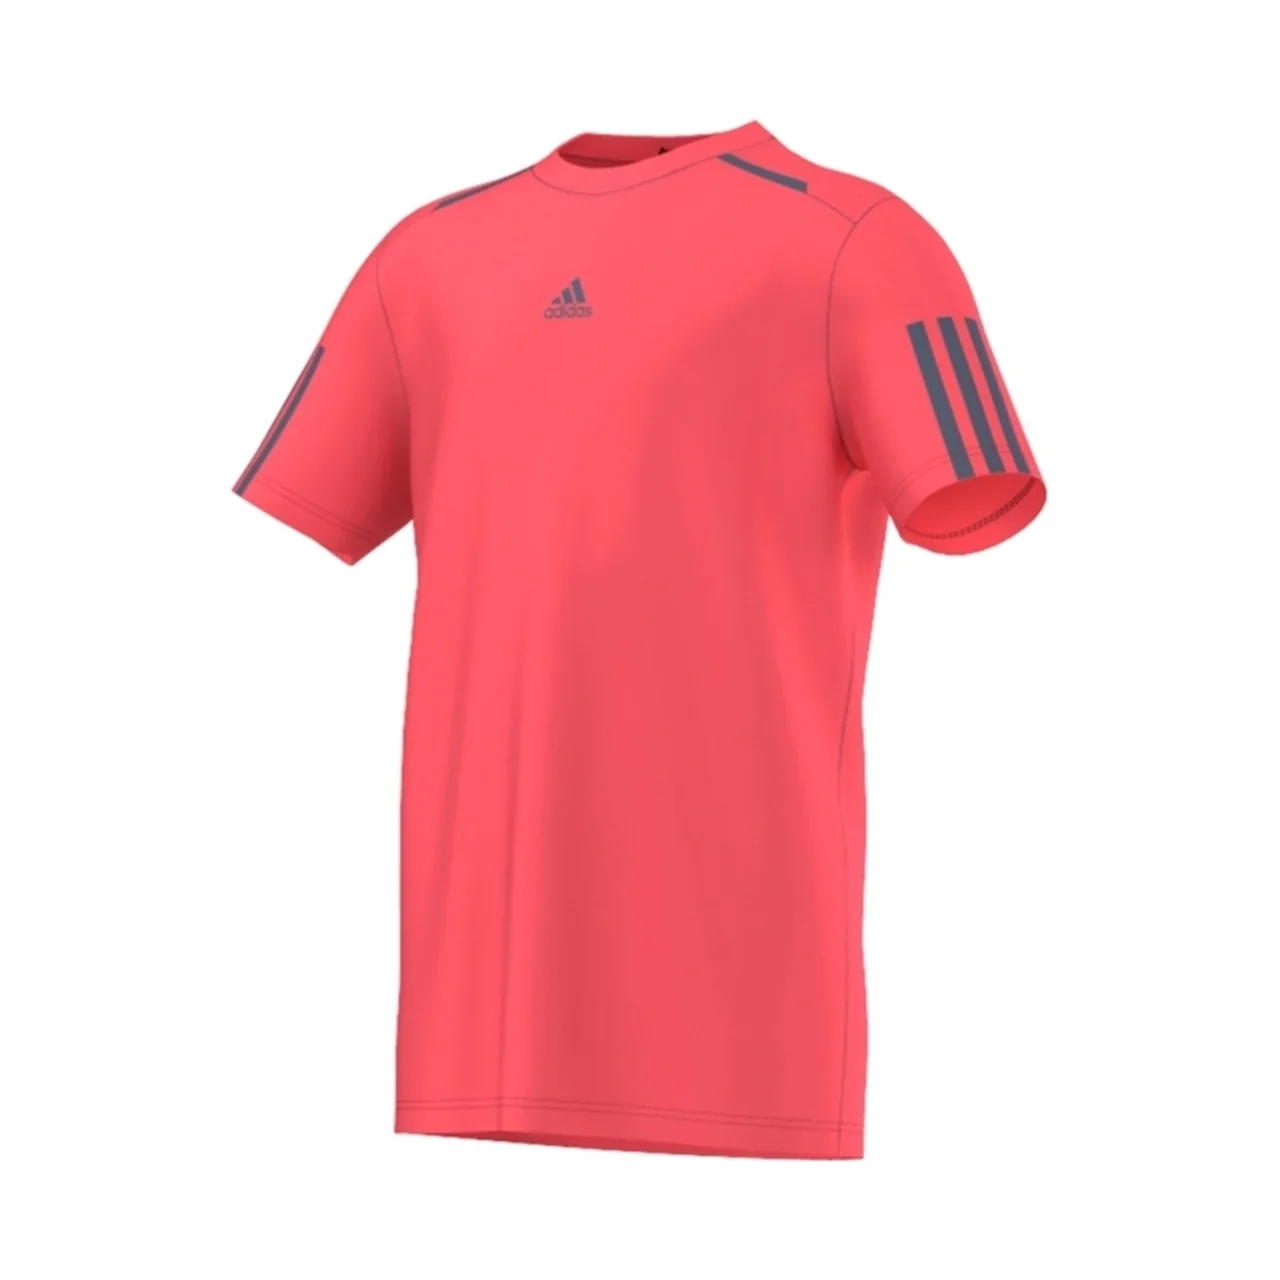 Adidas Barricade T-shirt Boy Flash Red/Tech Ink Size 128 cm